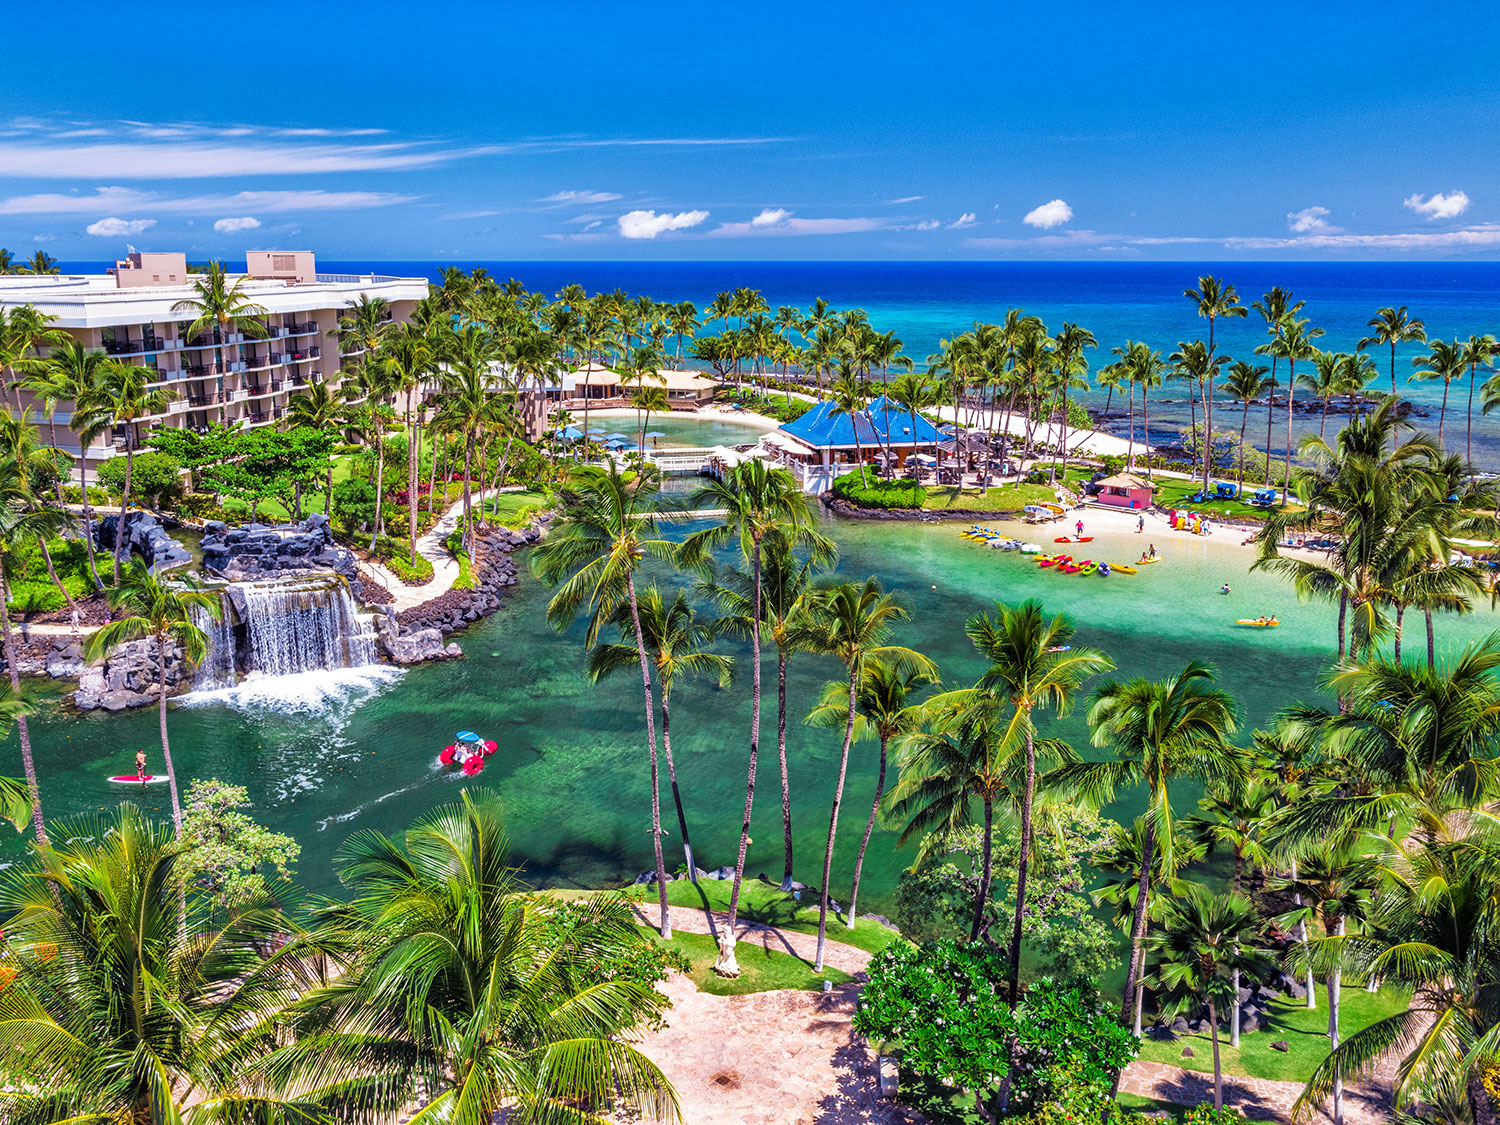 Hilton Hawaiian Village vacation deals - Lowest Prices, Promotions,  Reviews, Last Minute Deals